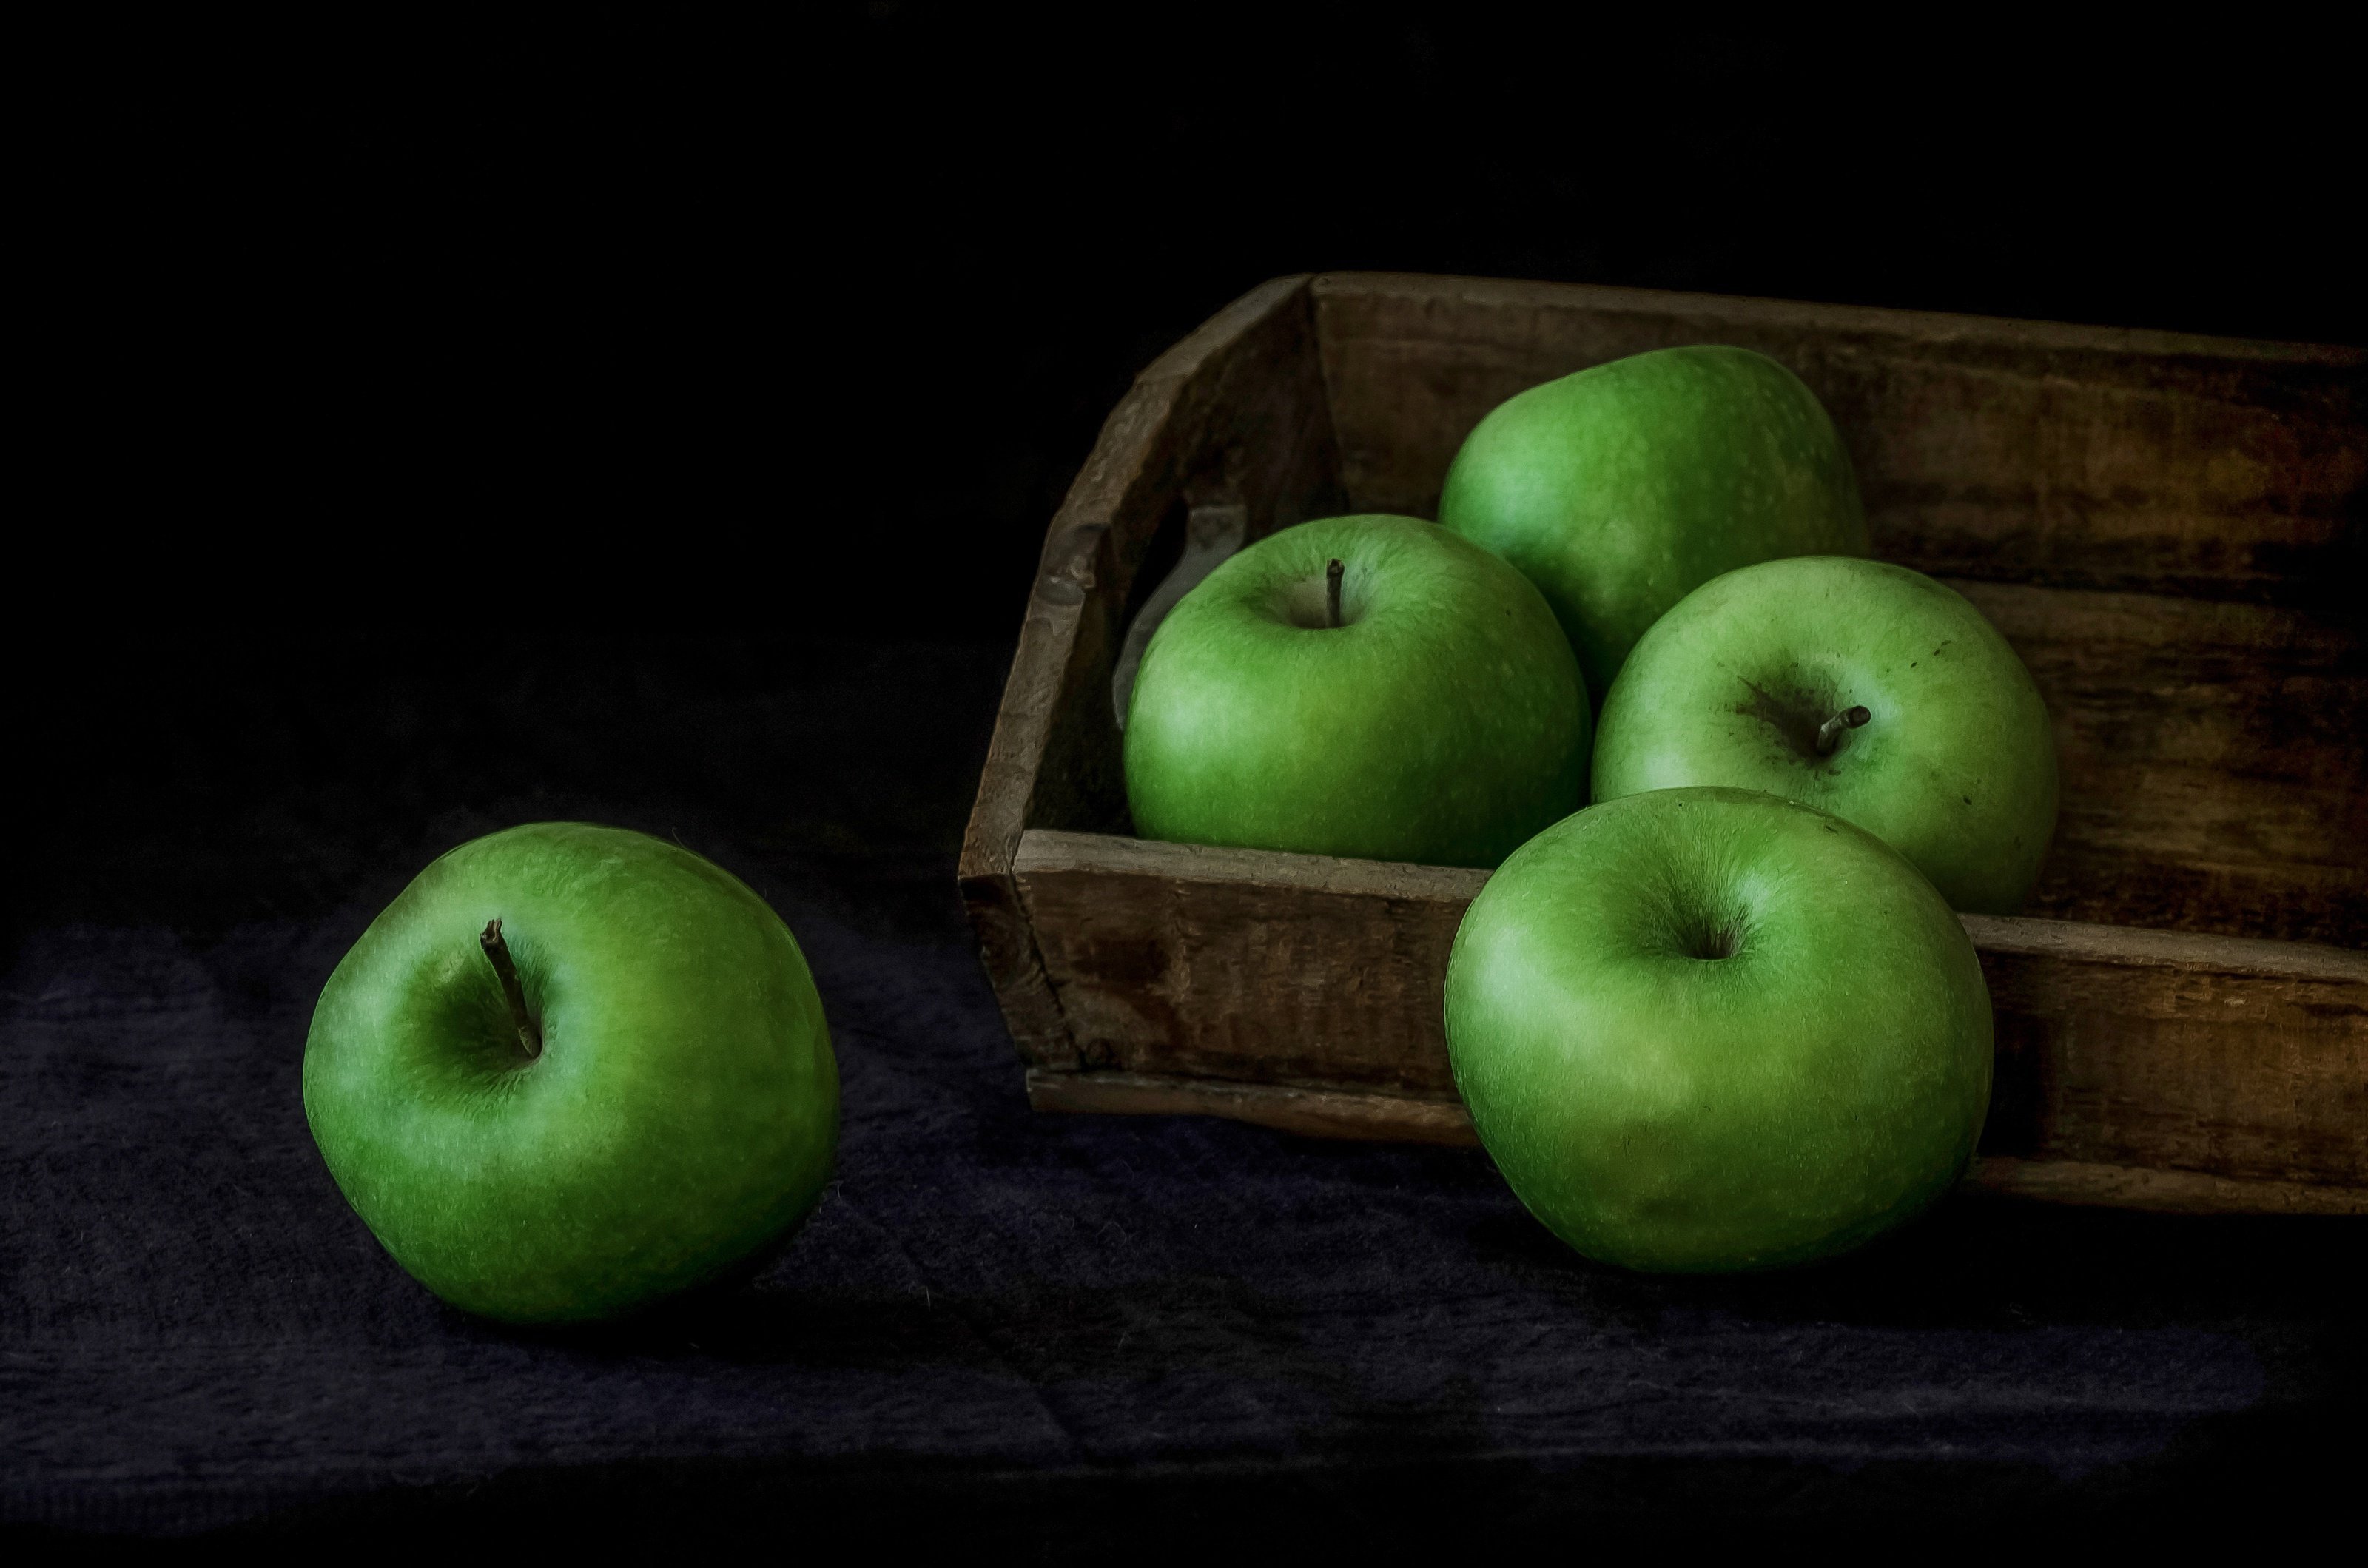 Яблоко на черном фоне. Натюрморт с яблоками. Яблоко на темном фоне. Зеленое яблоко на черном фоне. Яблоко на столе.